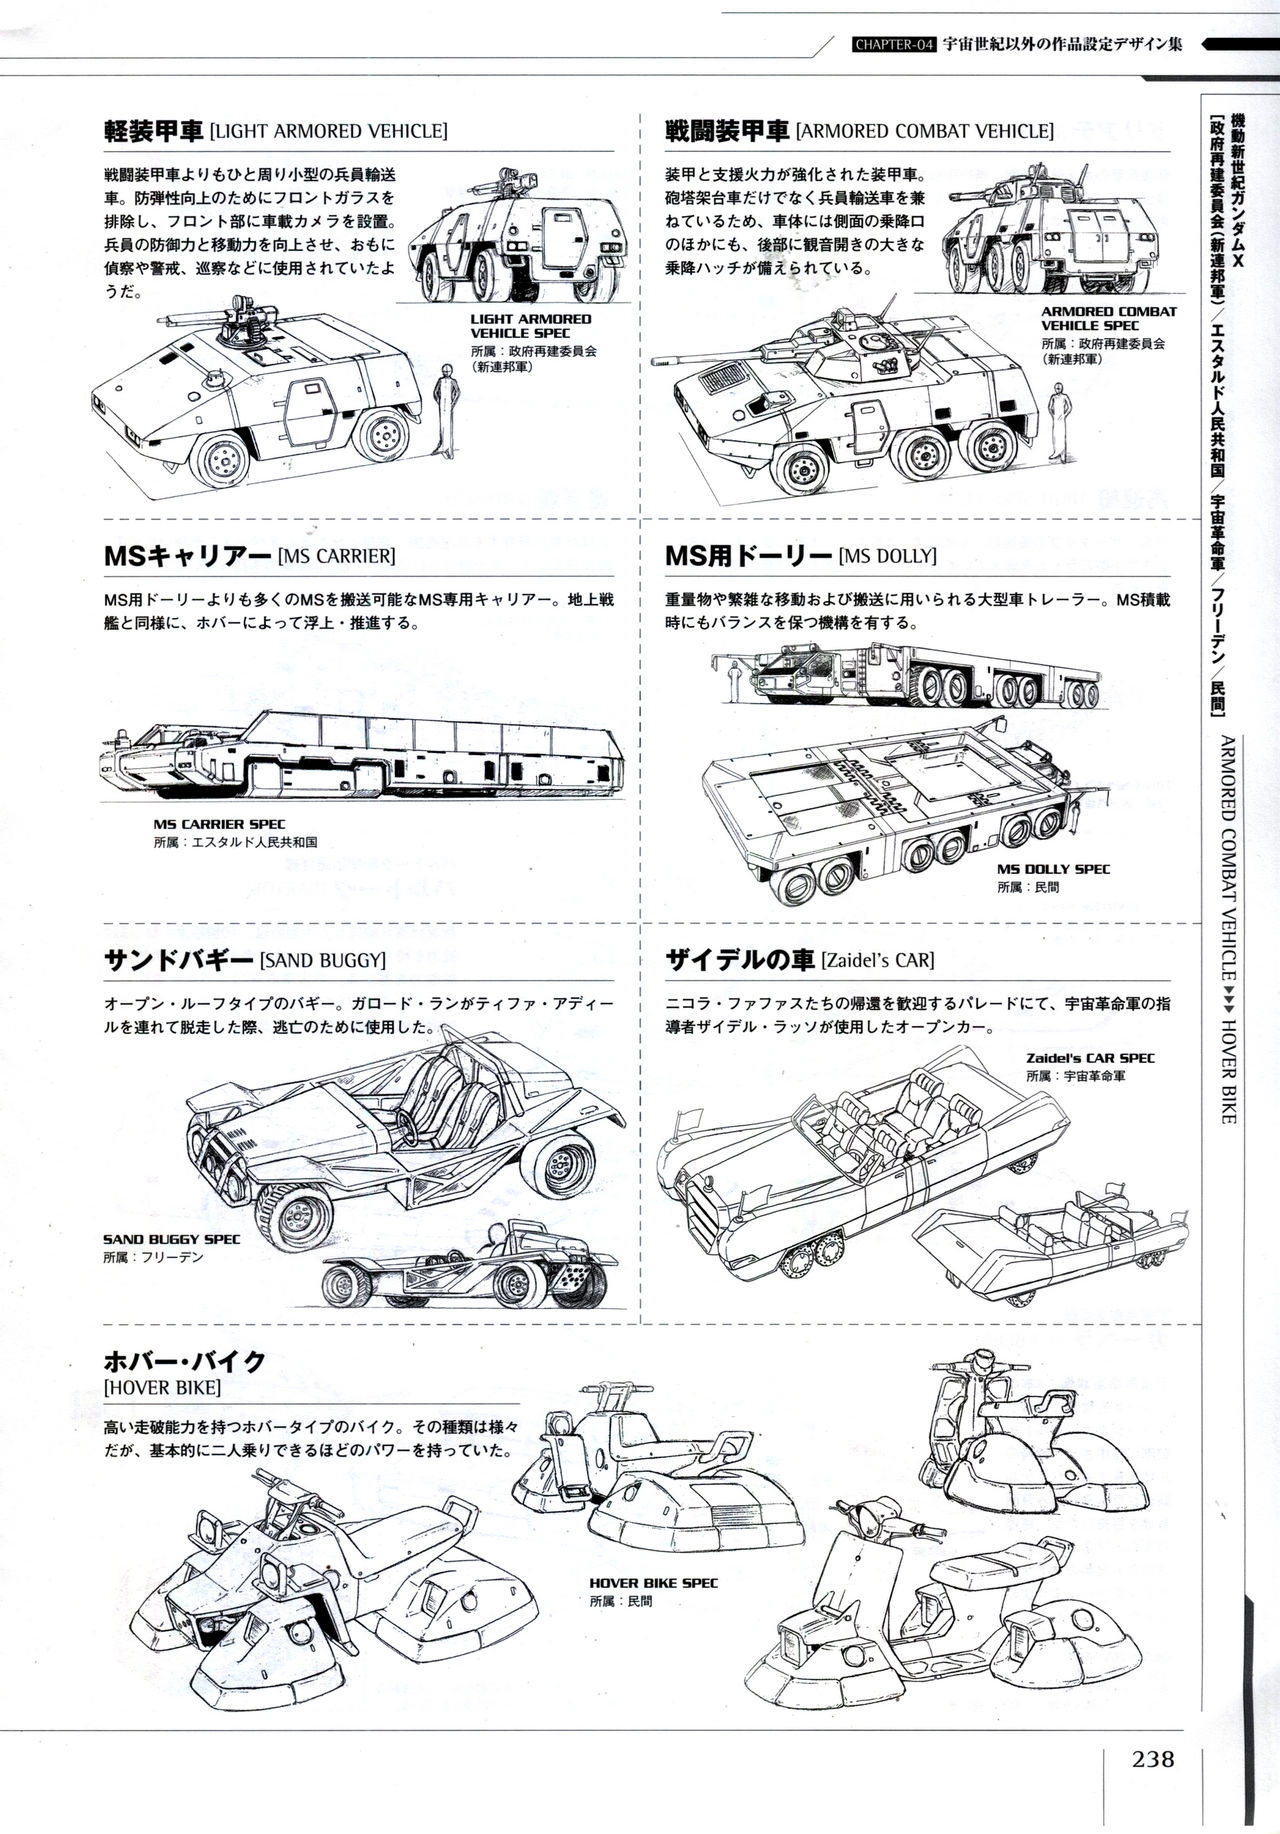 Mobile Suit Gundam - Ship & Aerospace Plane Encyclopedia - Revised Edition 243